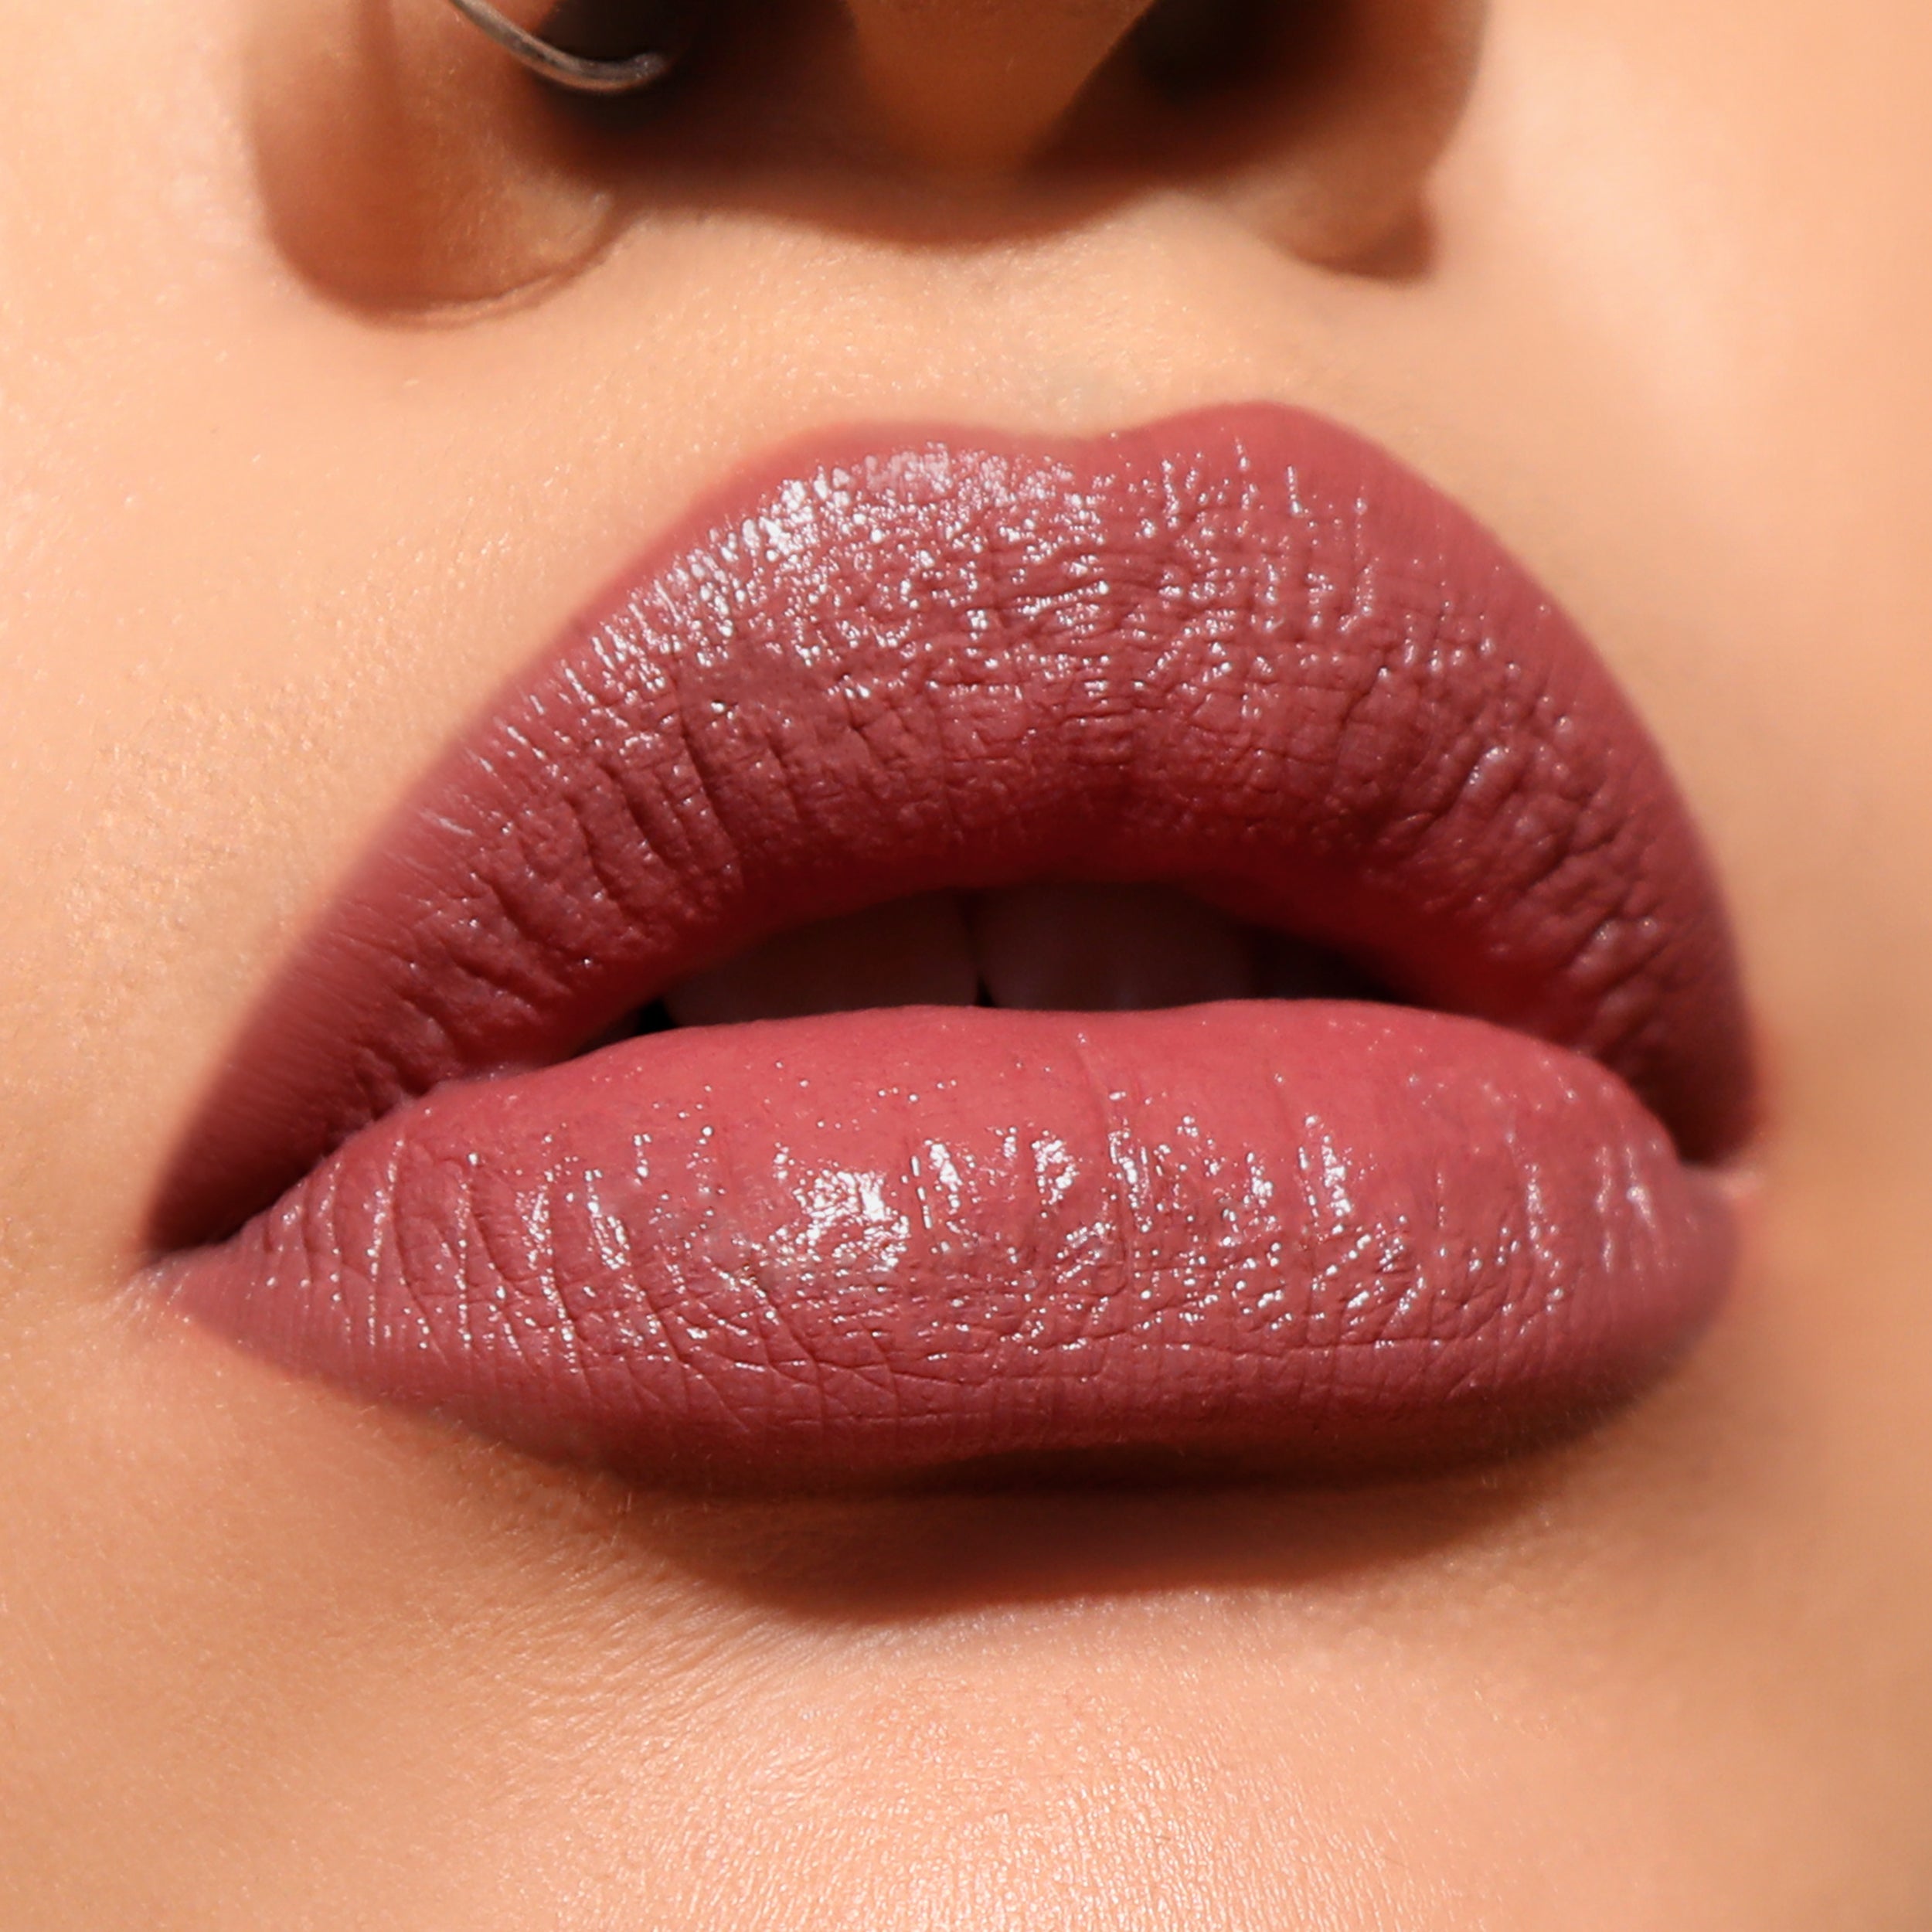 Lip Goddess Lipstick (004, Goddess)